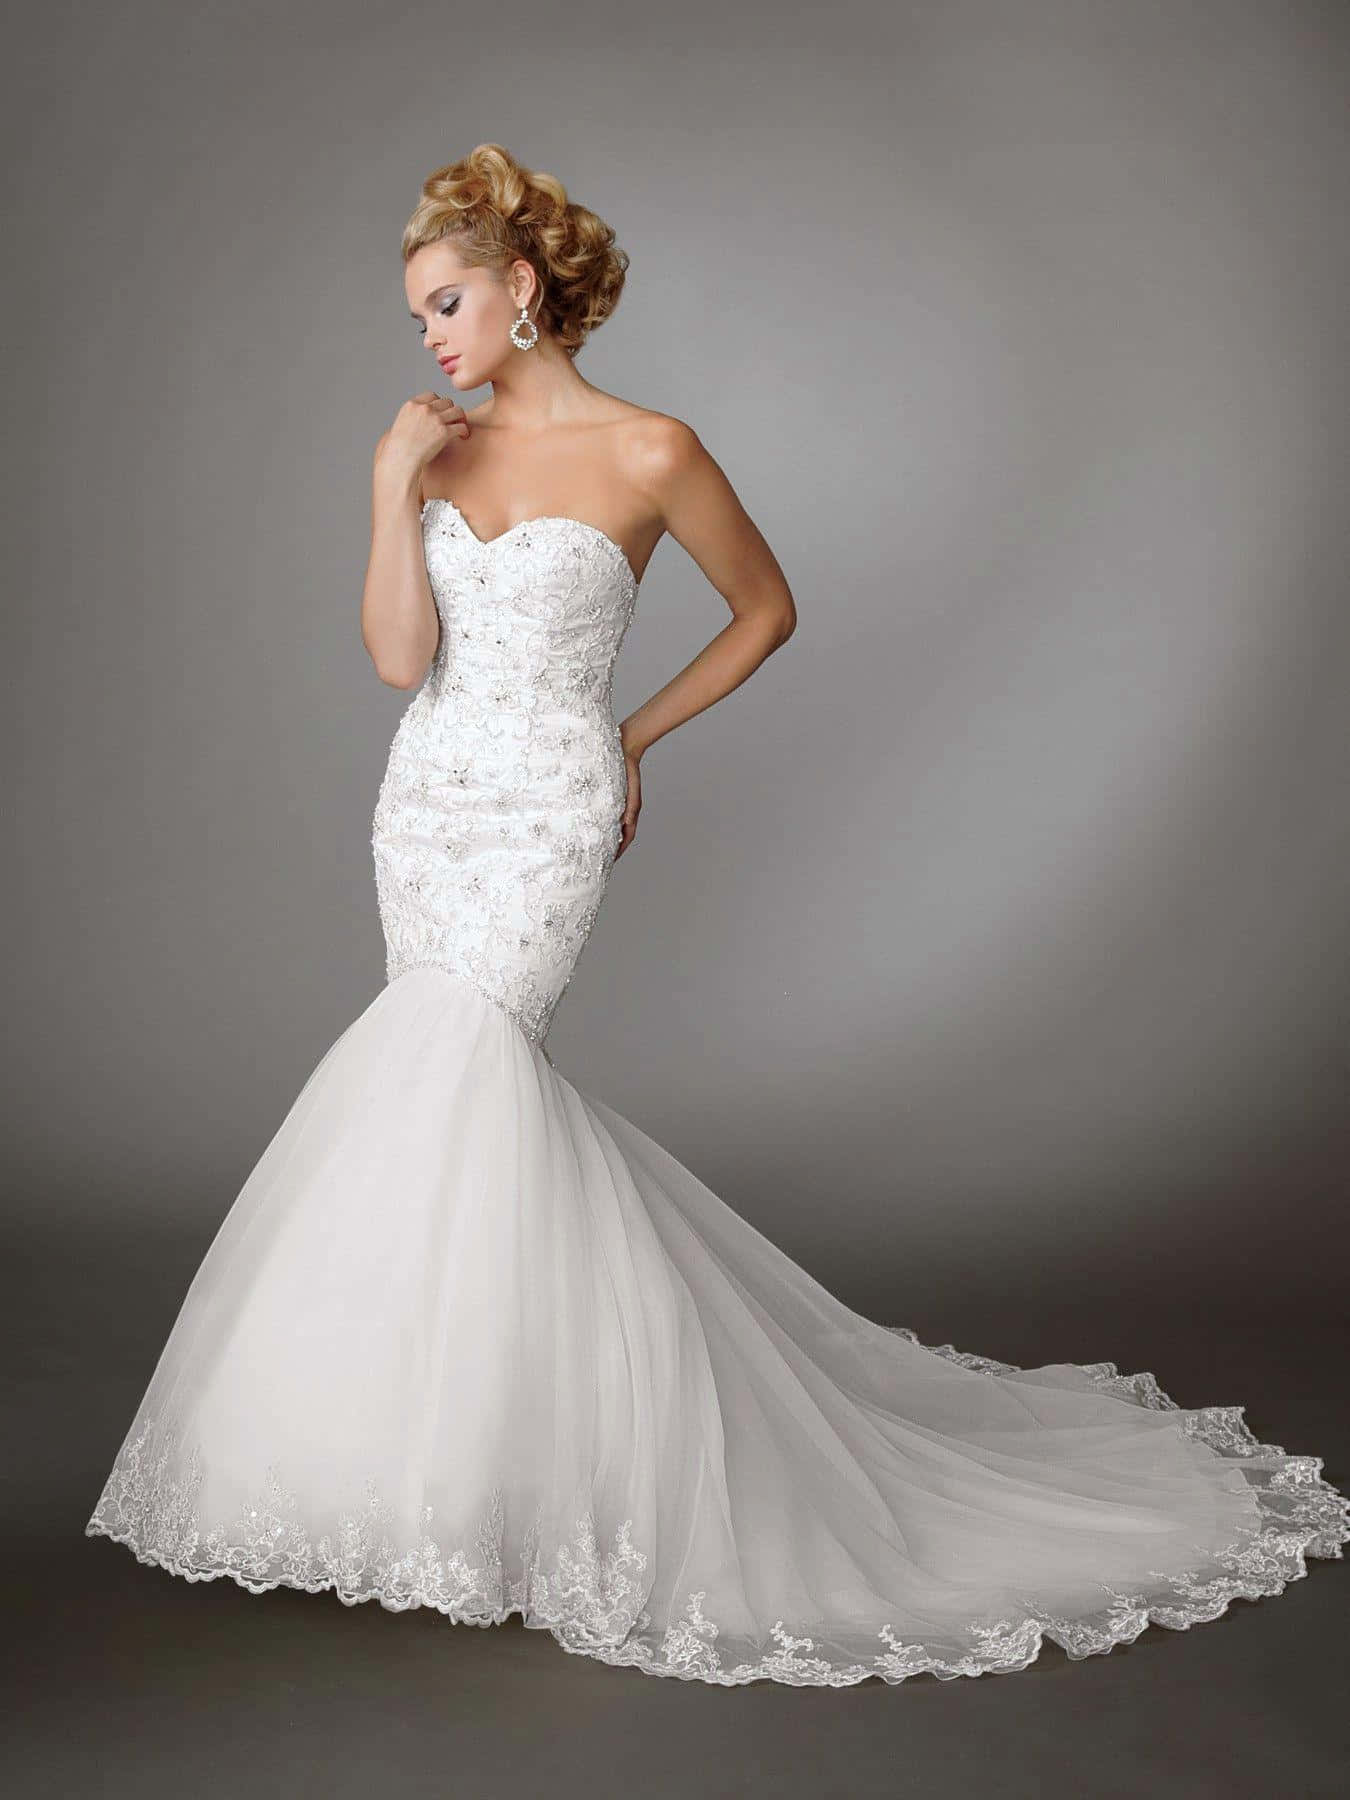 Elegant Bride Wearing Gorgeous Wedding Gown